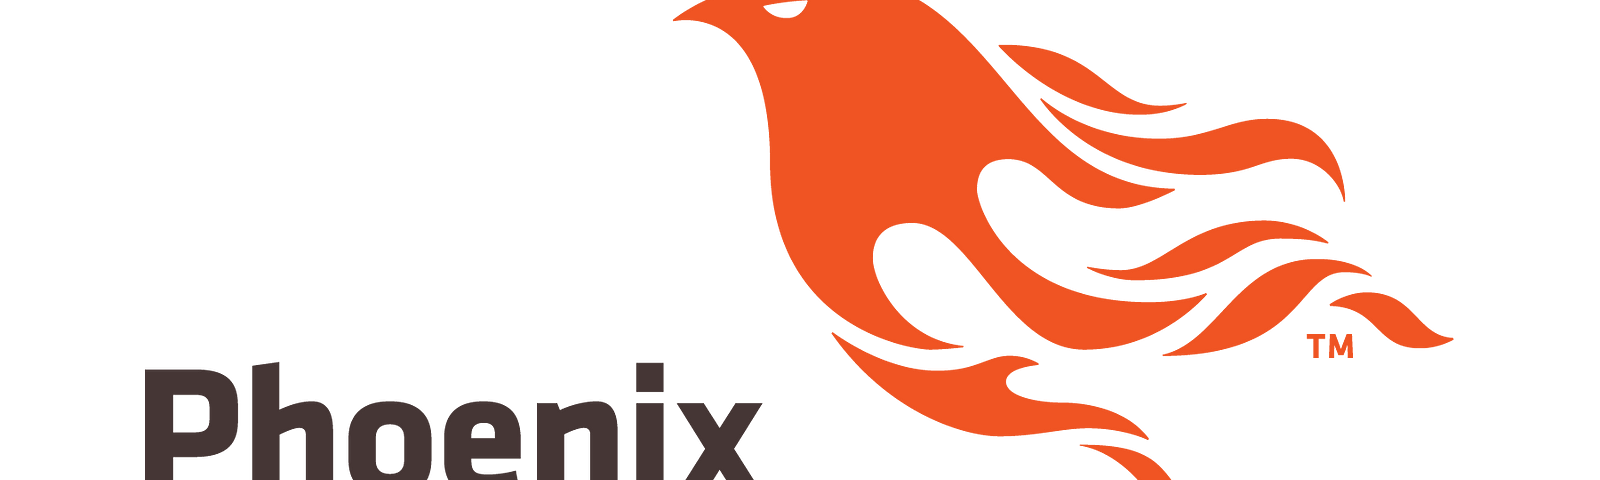 The Phoenix Framework logo